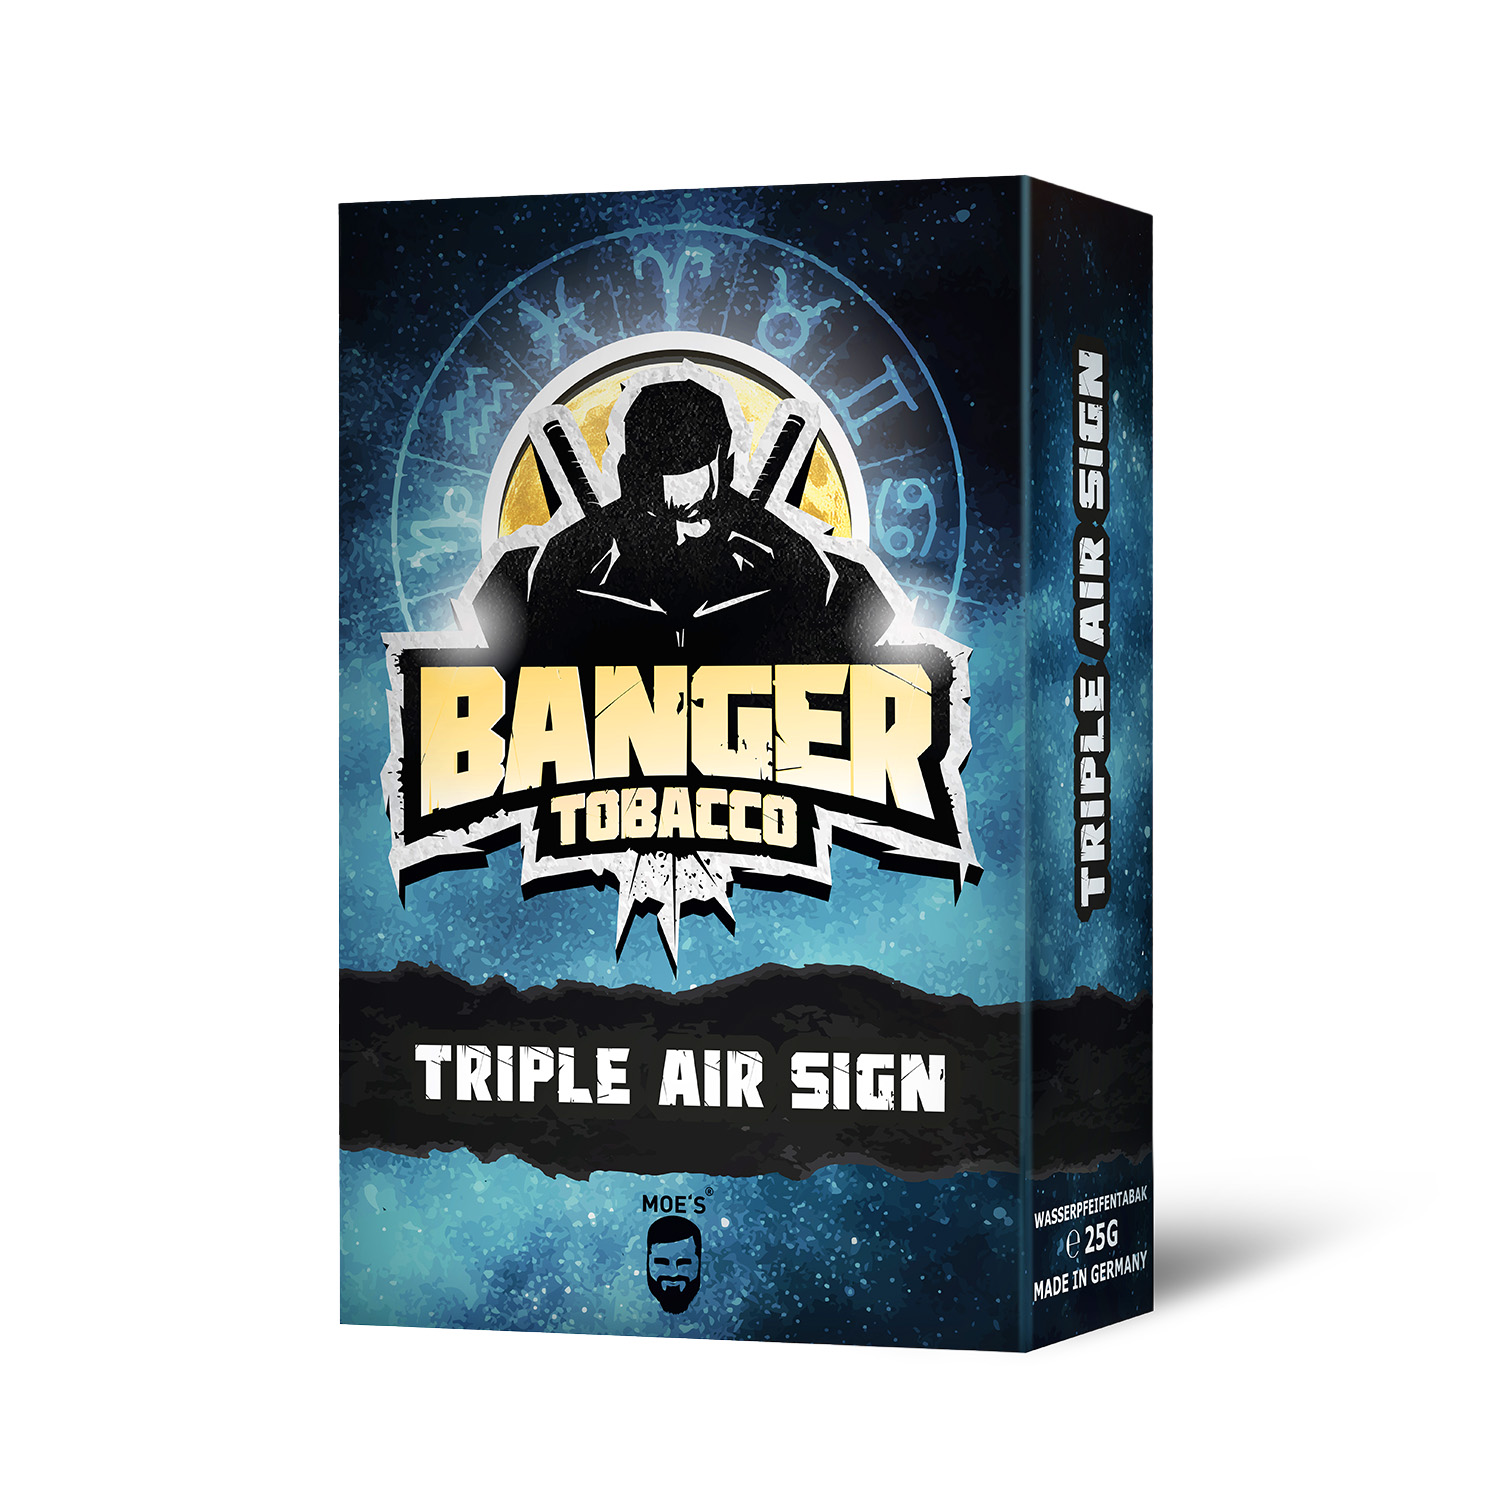 BANGER - TRIPLE AIR SIGN